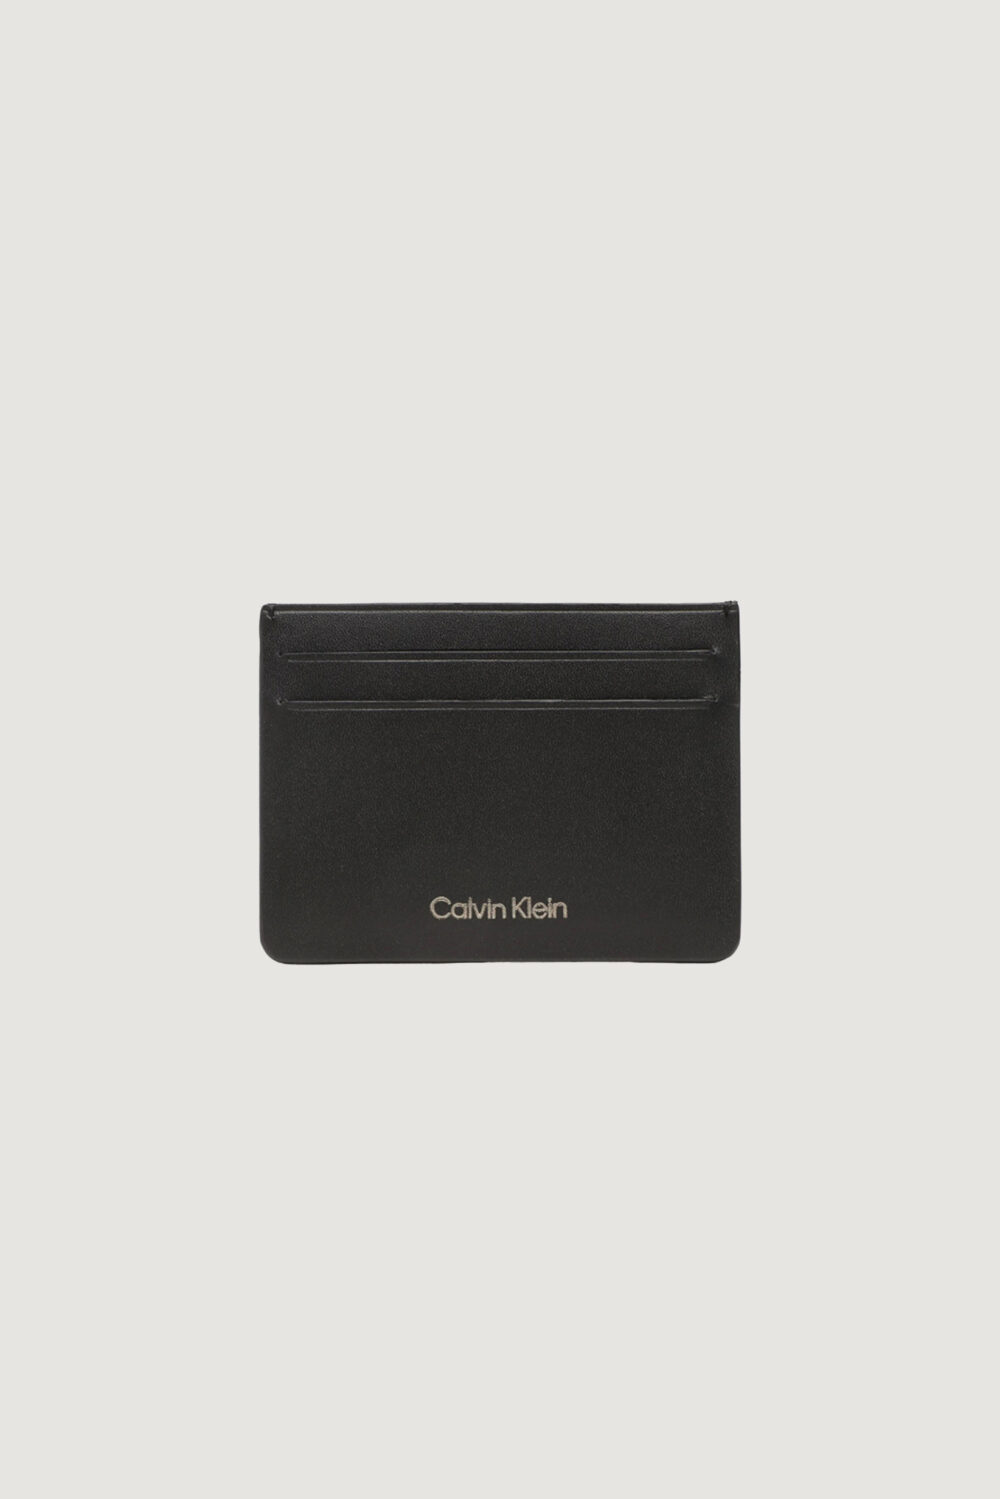 Portacarte Calvin Klein CK CONCISE CARDHOLDER 6CC Nero - Foto 1